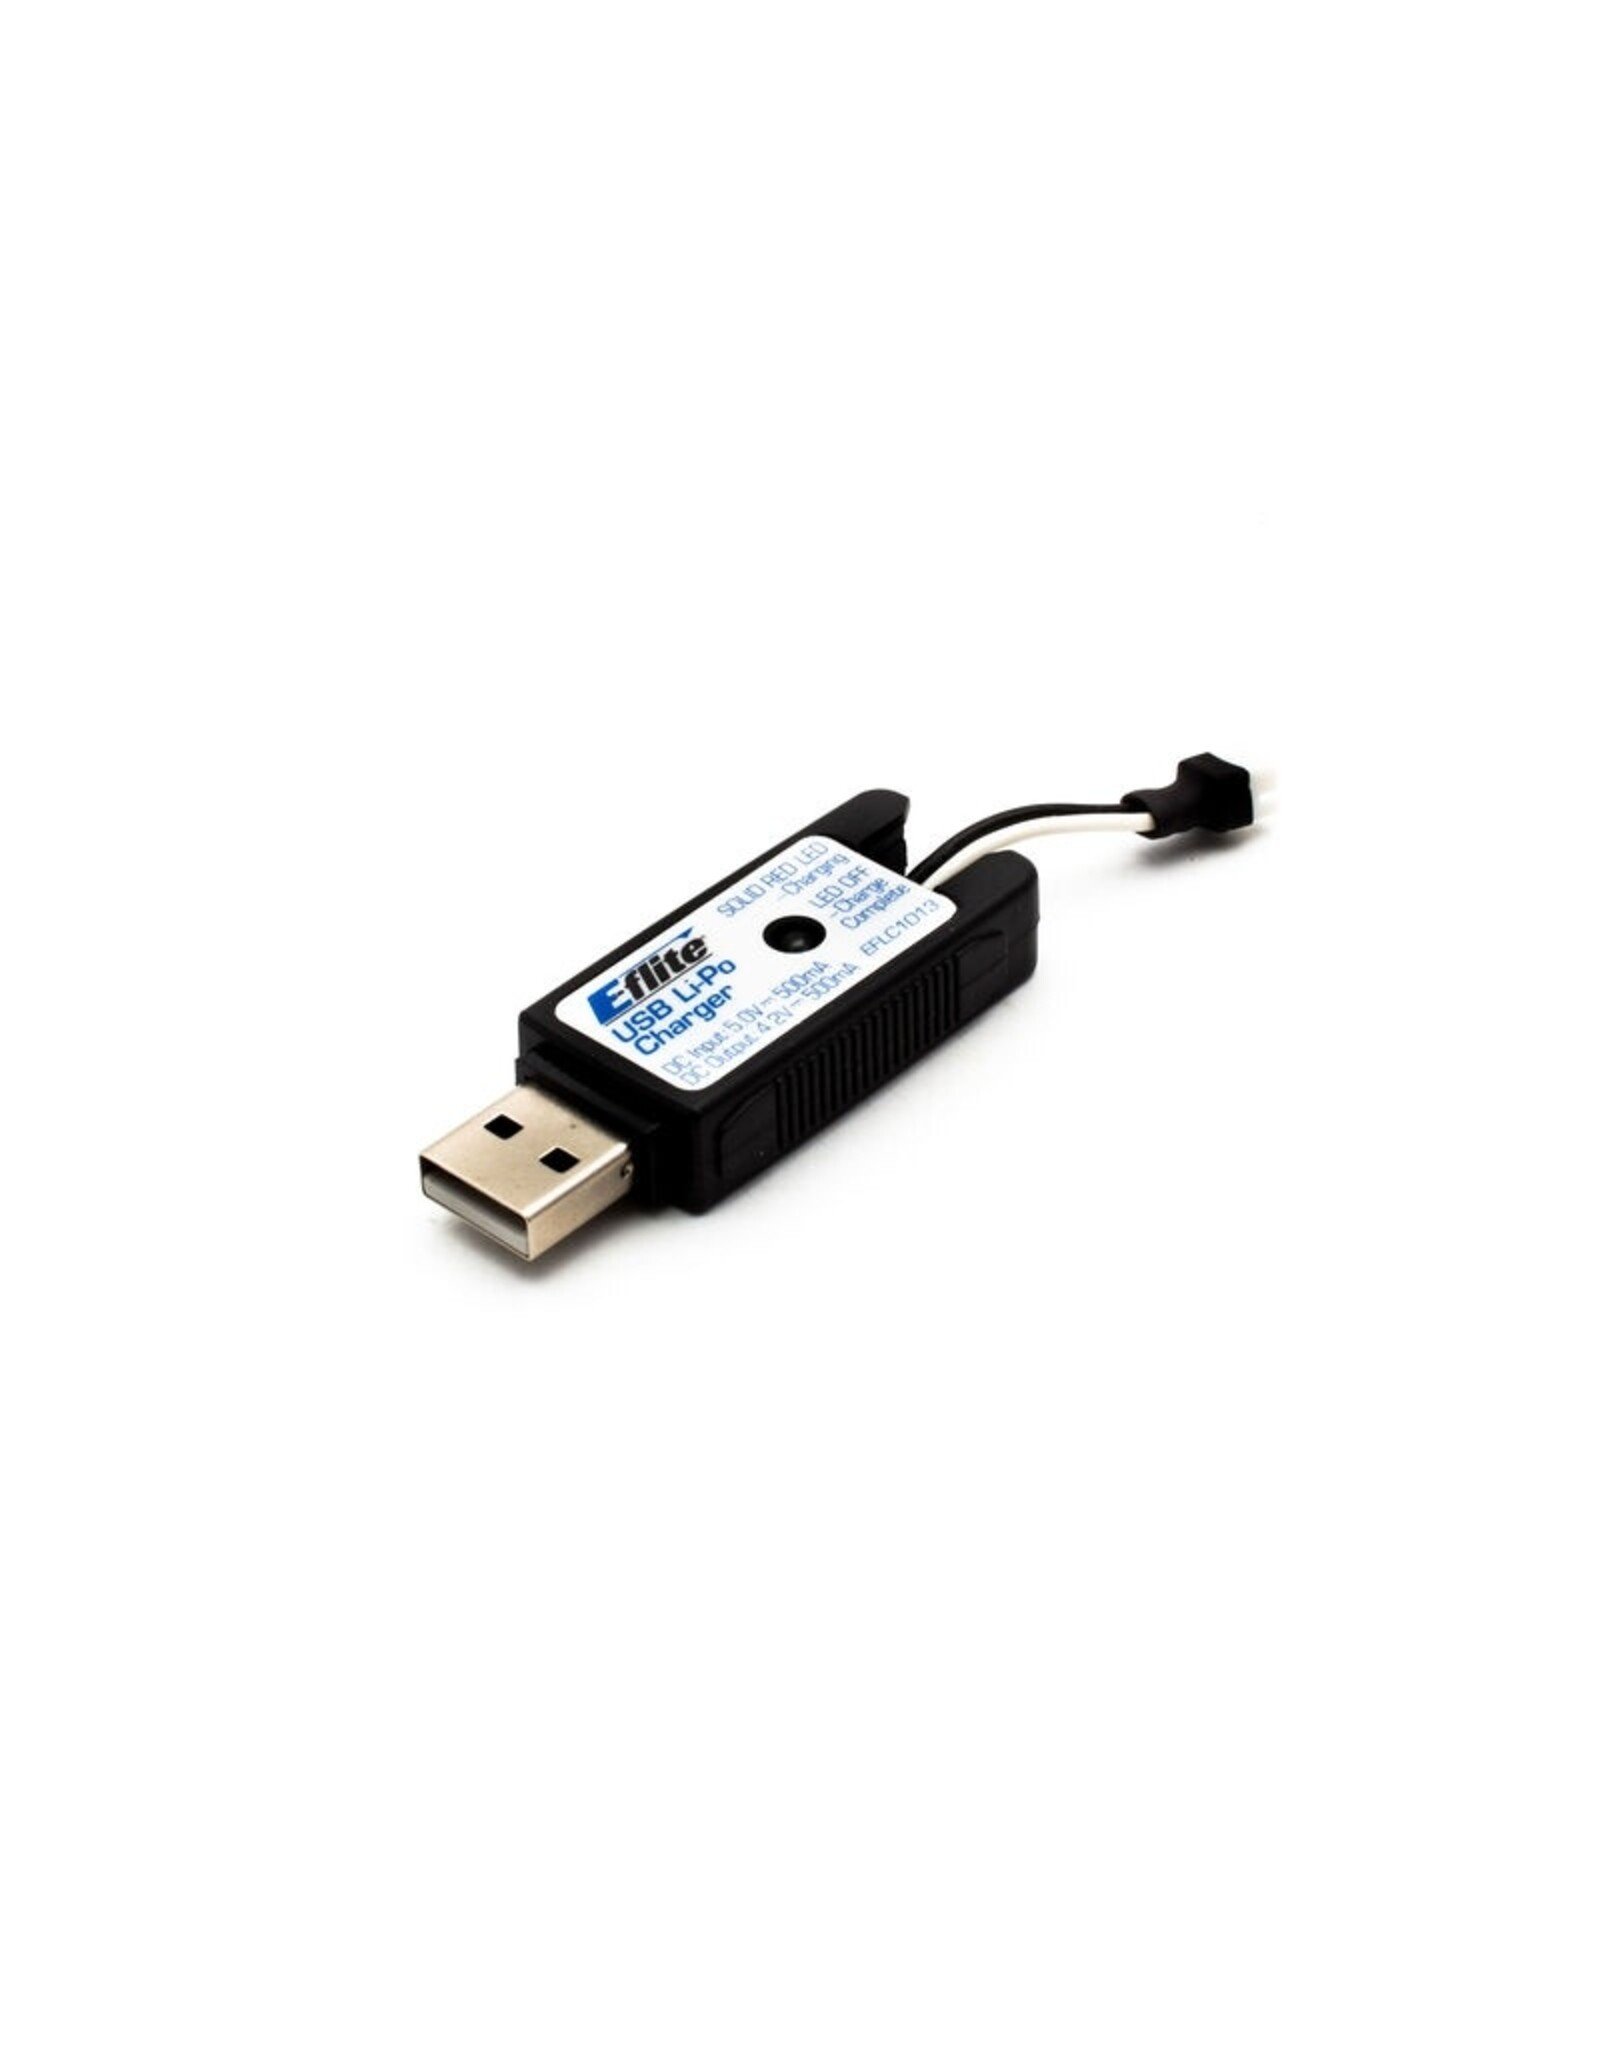 E-flite EFLC1013 1S USB Li-Po Charger, 500mAh High Current UMX